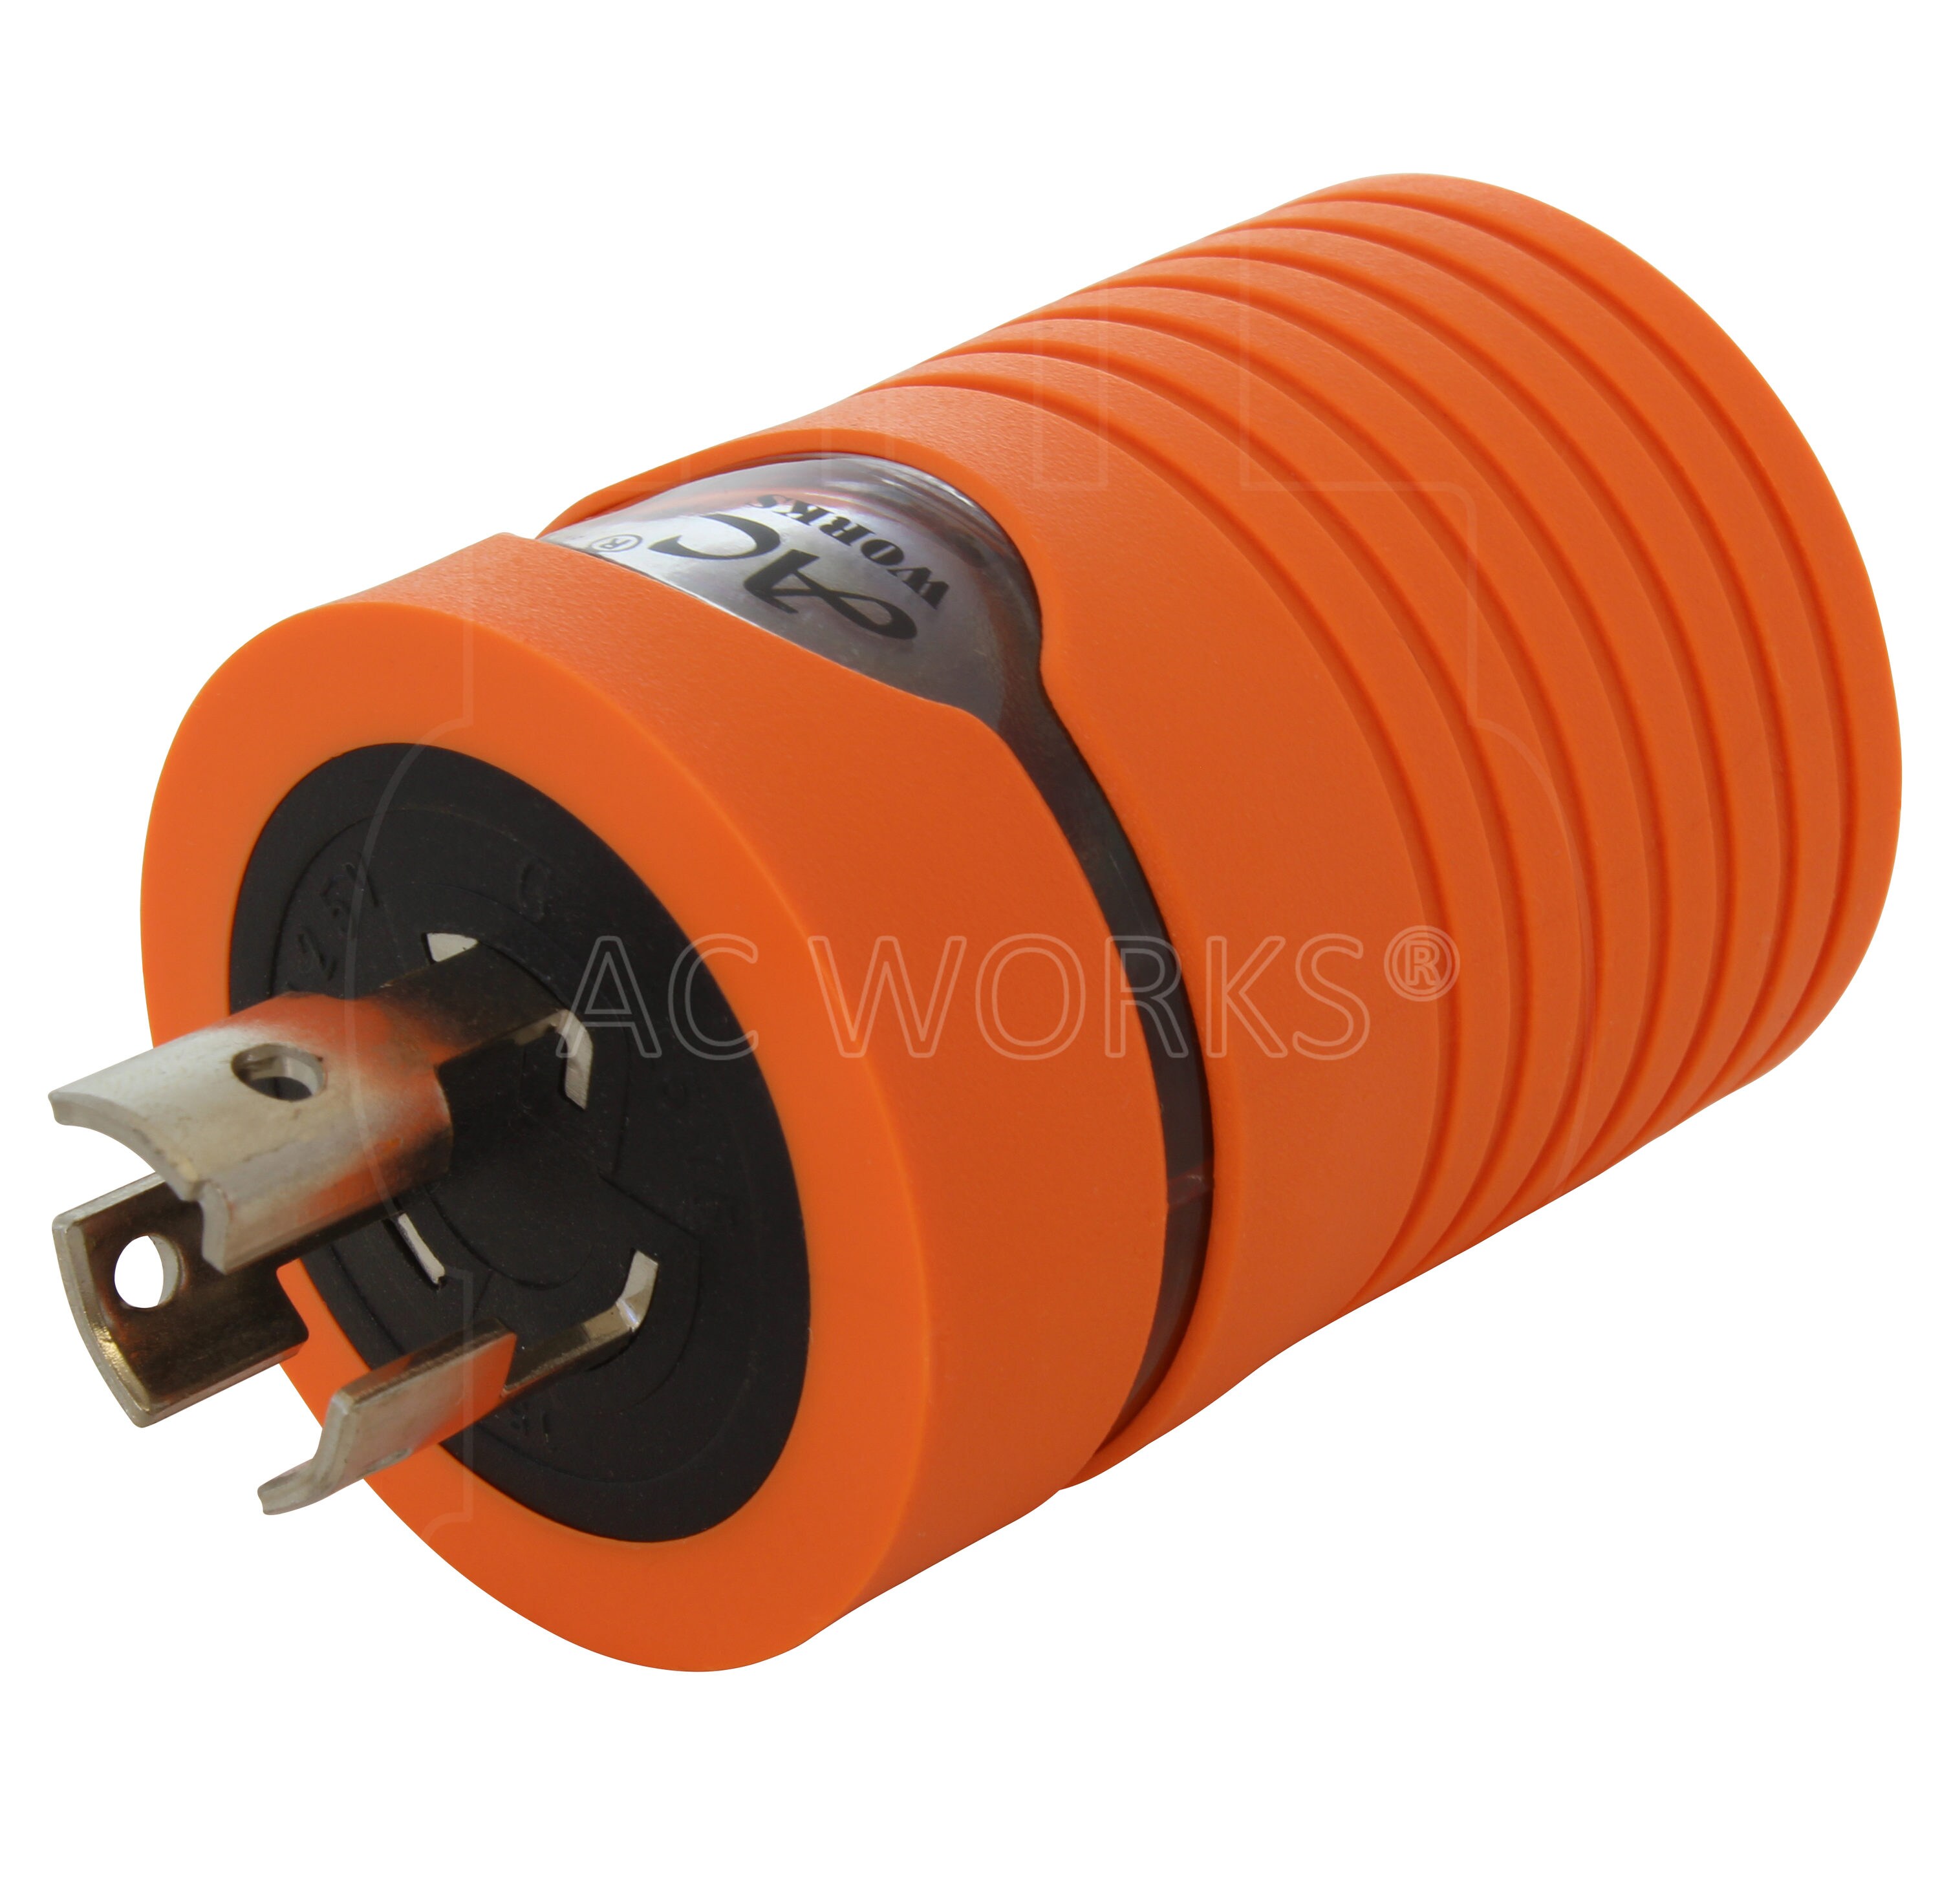 Conntek 30120 UNO Locking Plug NEMA L5-15P to NEMA 5-15R 125-Volt Adapter 